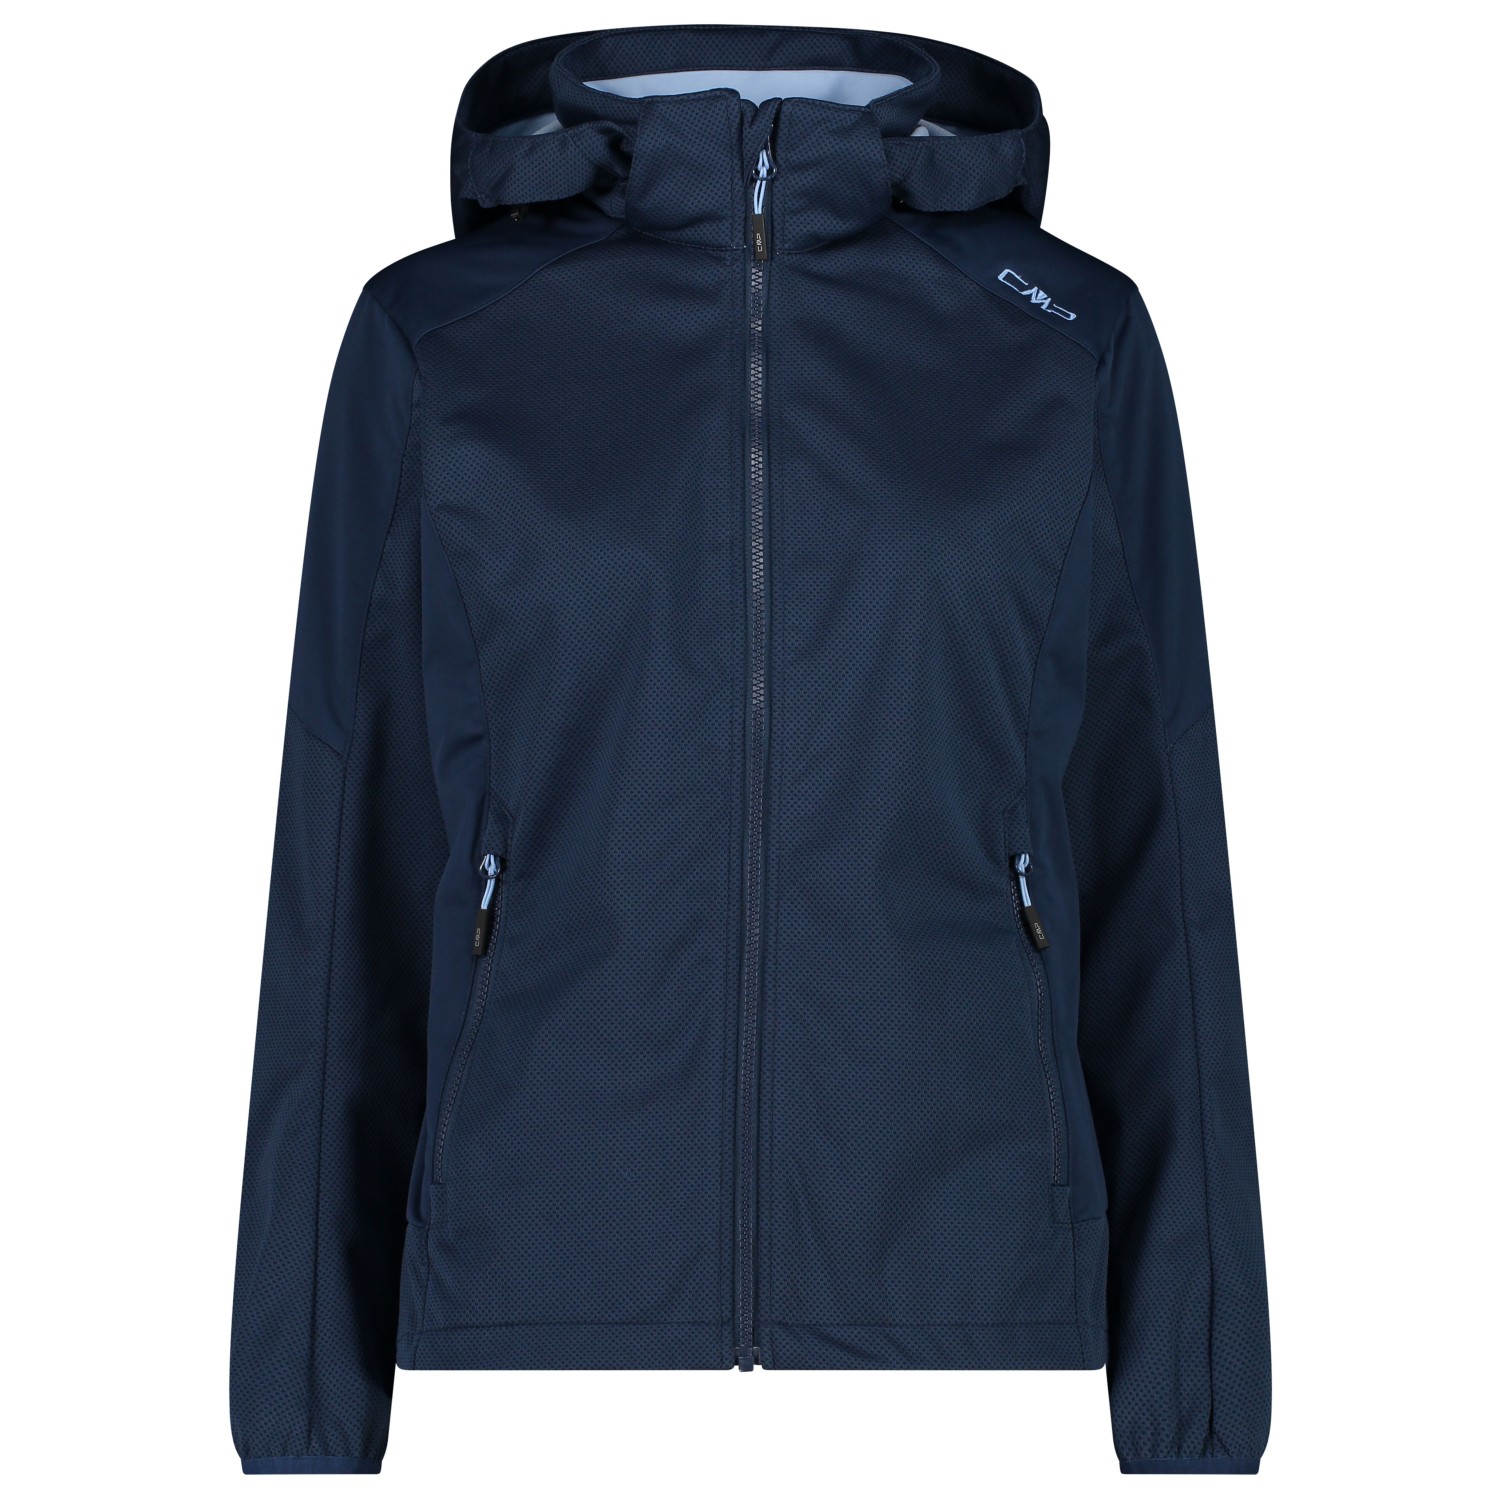 Куртка из софтшелла Cmp Women's Jacquard Softshell Zip Hood, синий двойная куртка cmp jacket zip hood detachable inner taslan цвет nero